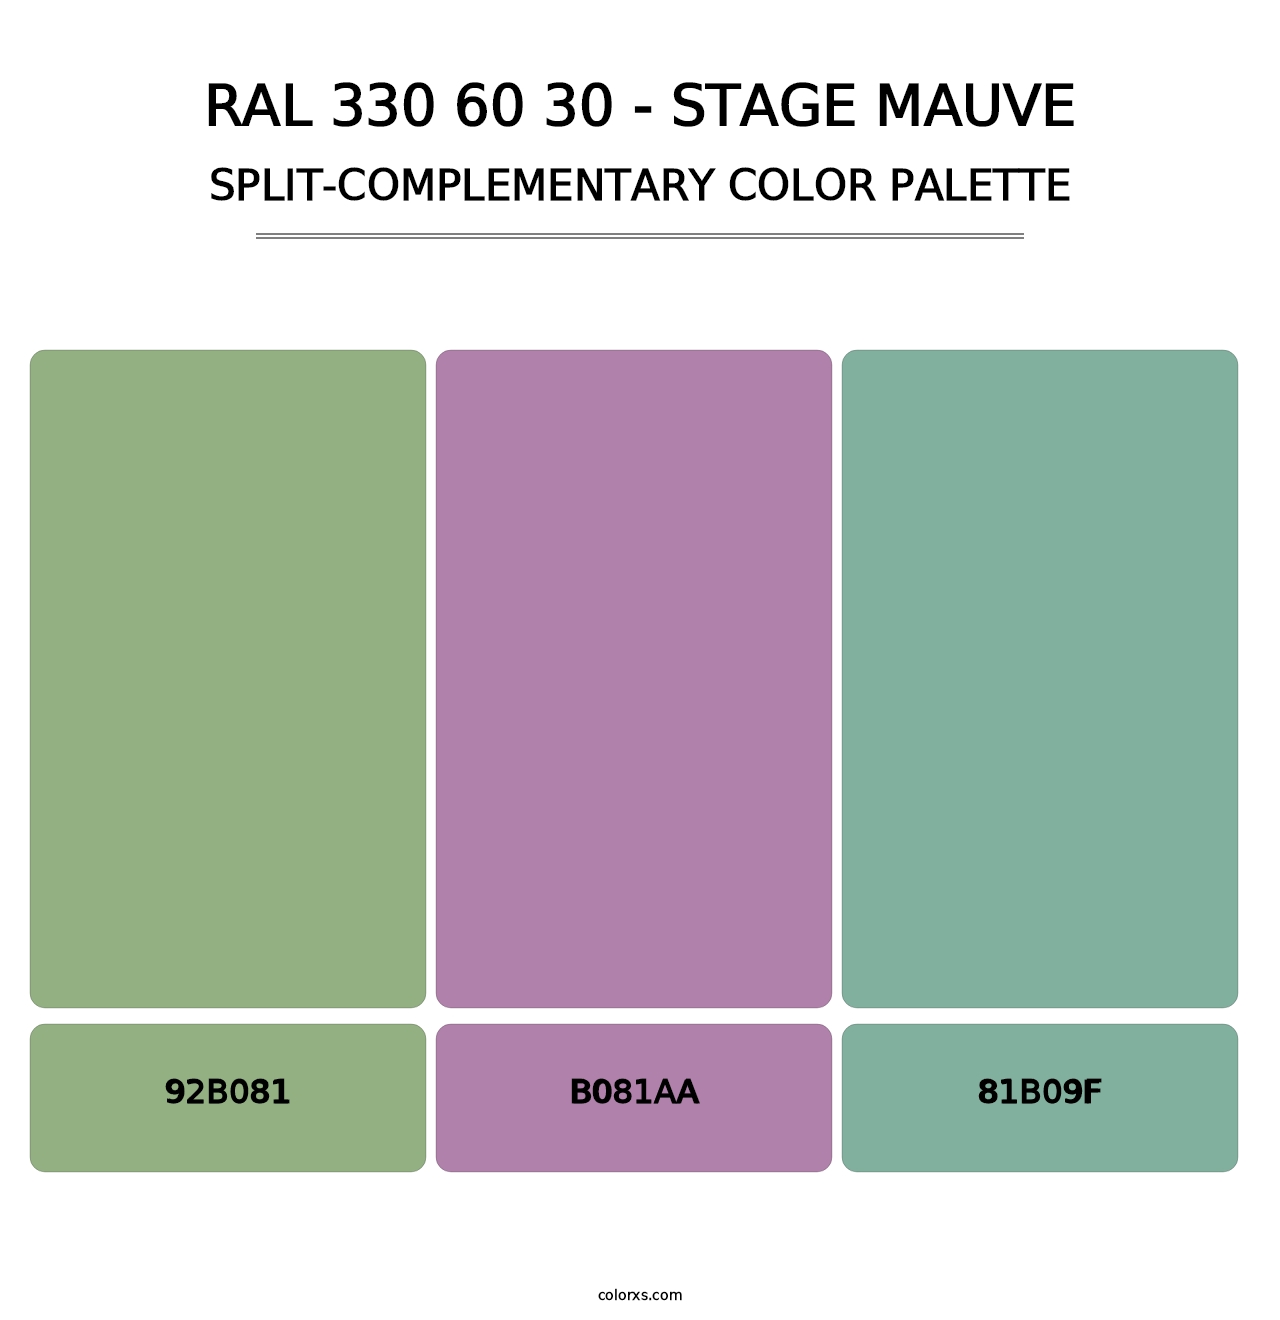 RAL 330 60 30 - Stage Mauve - Split-Complementary Color Palette